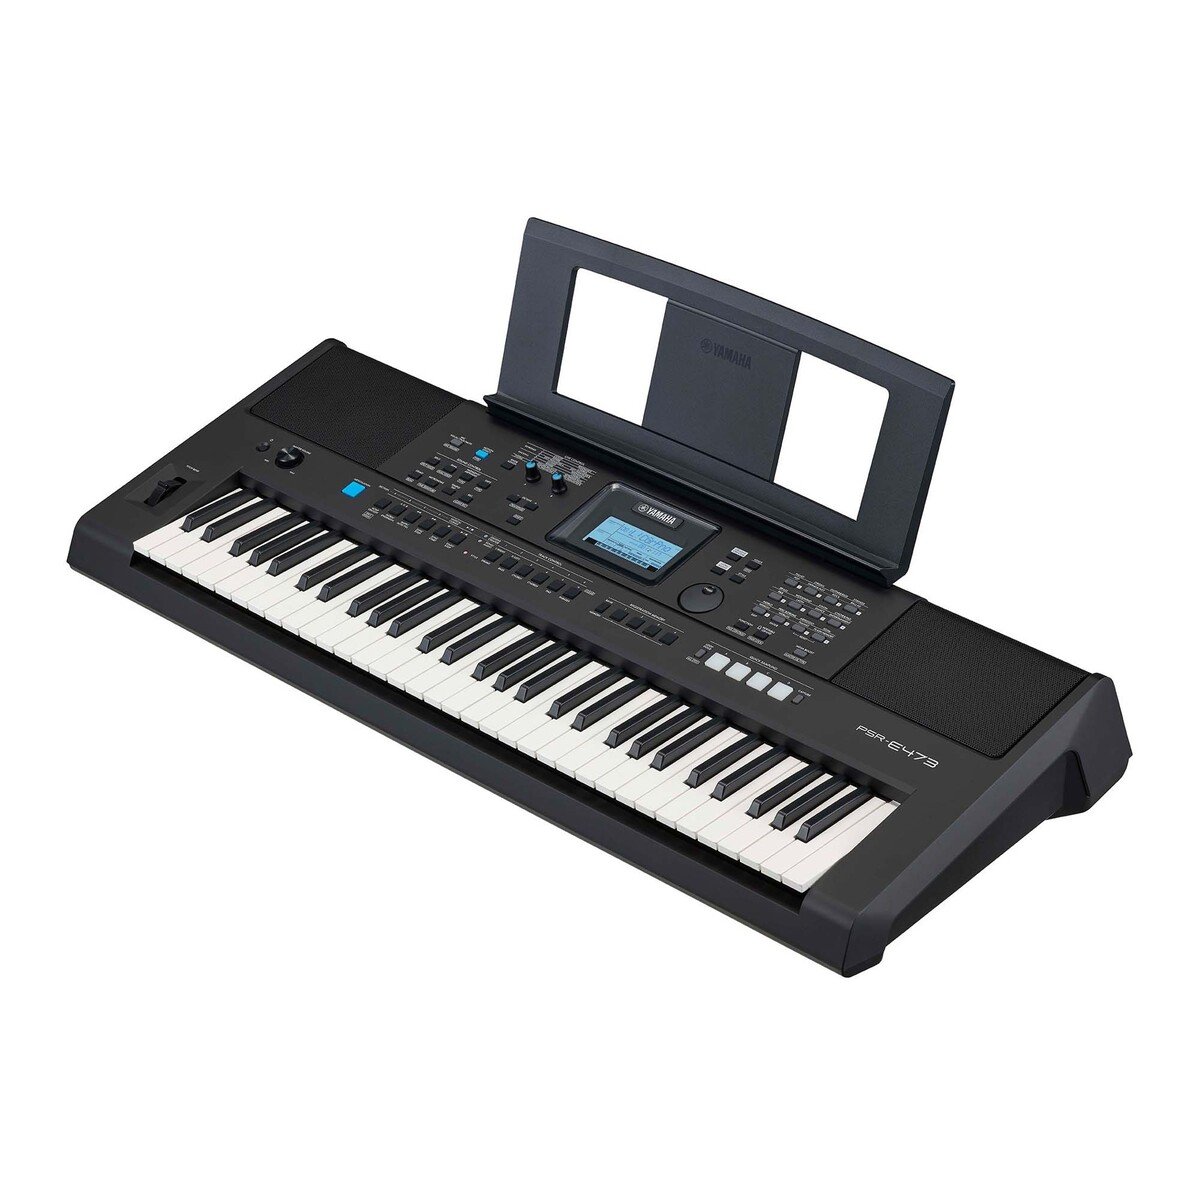 Yamaha 61 Keys Keyboard PSRE-473